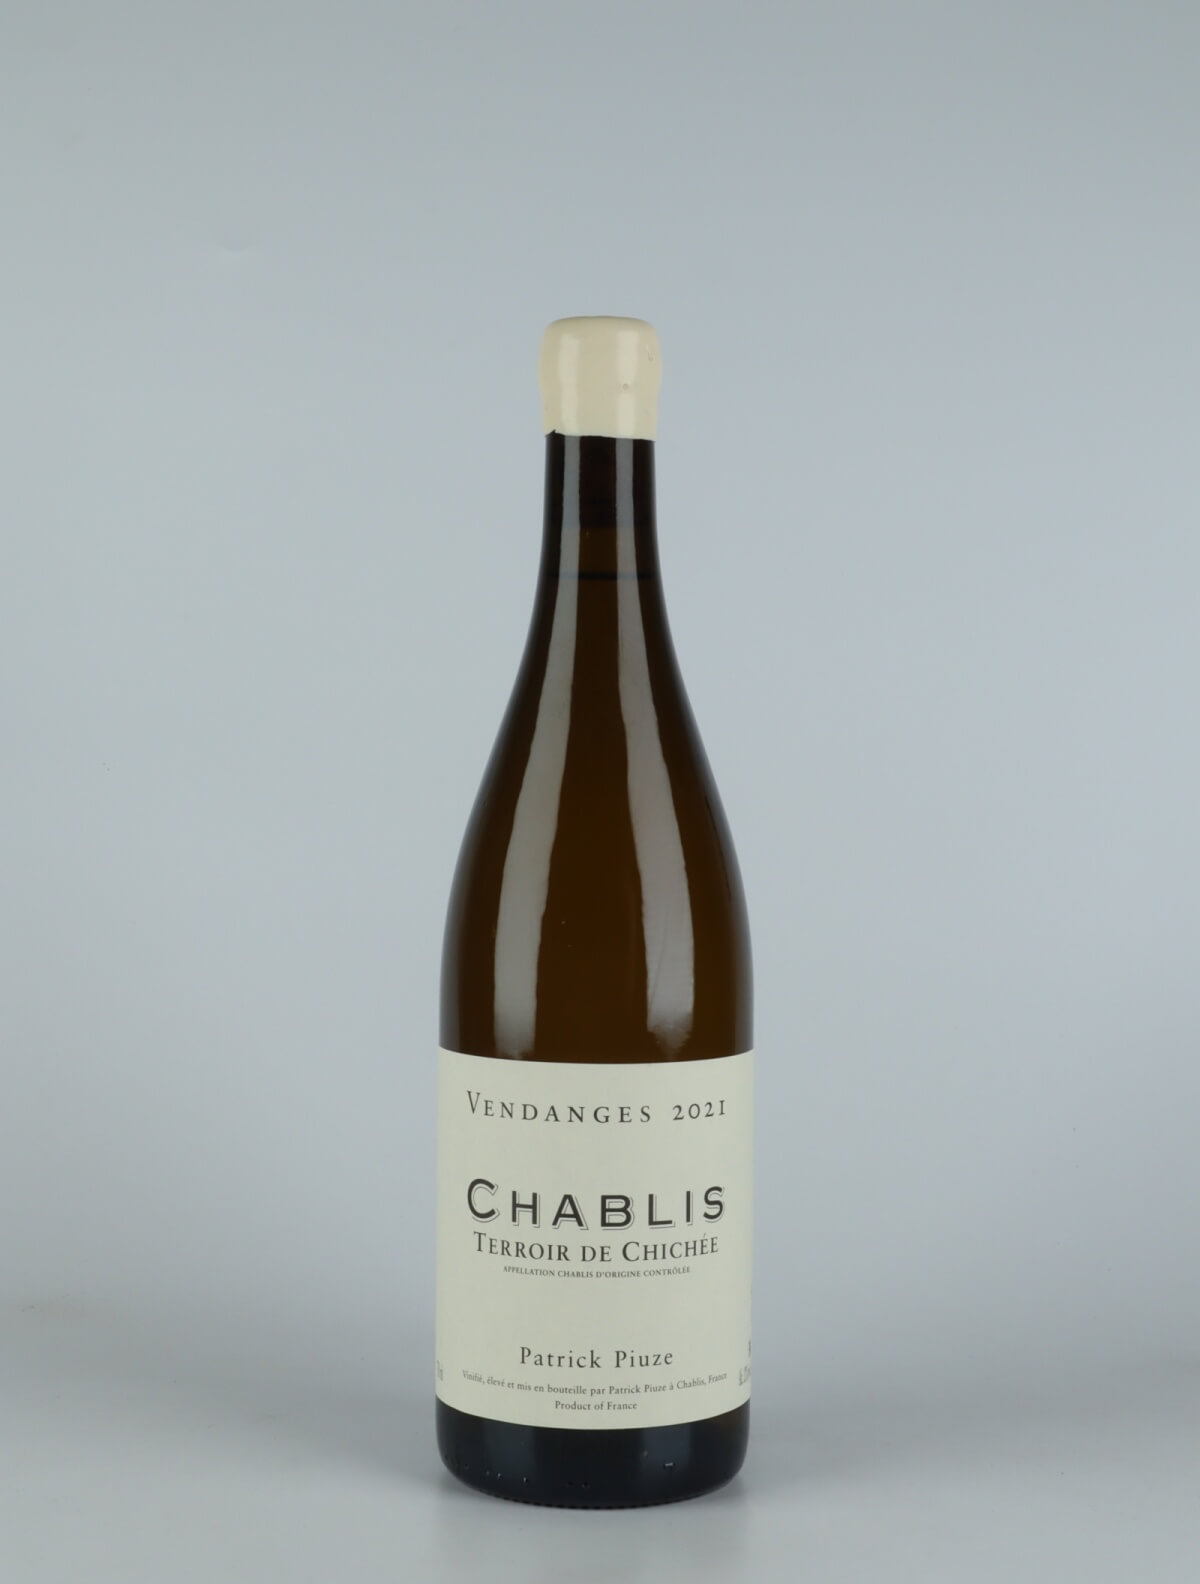 A bottle 2021 Chablis - Terroir de Chichée White wine from Patrick Piuze, Burgundy in France